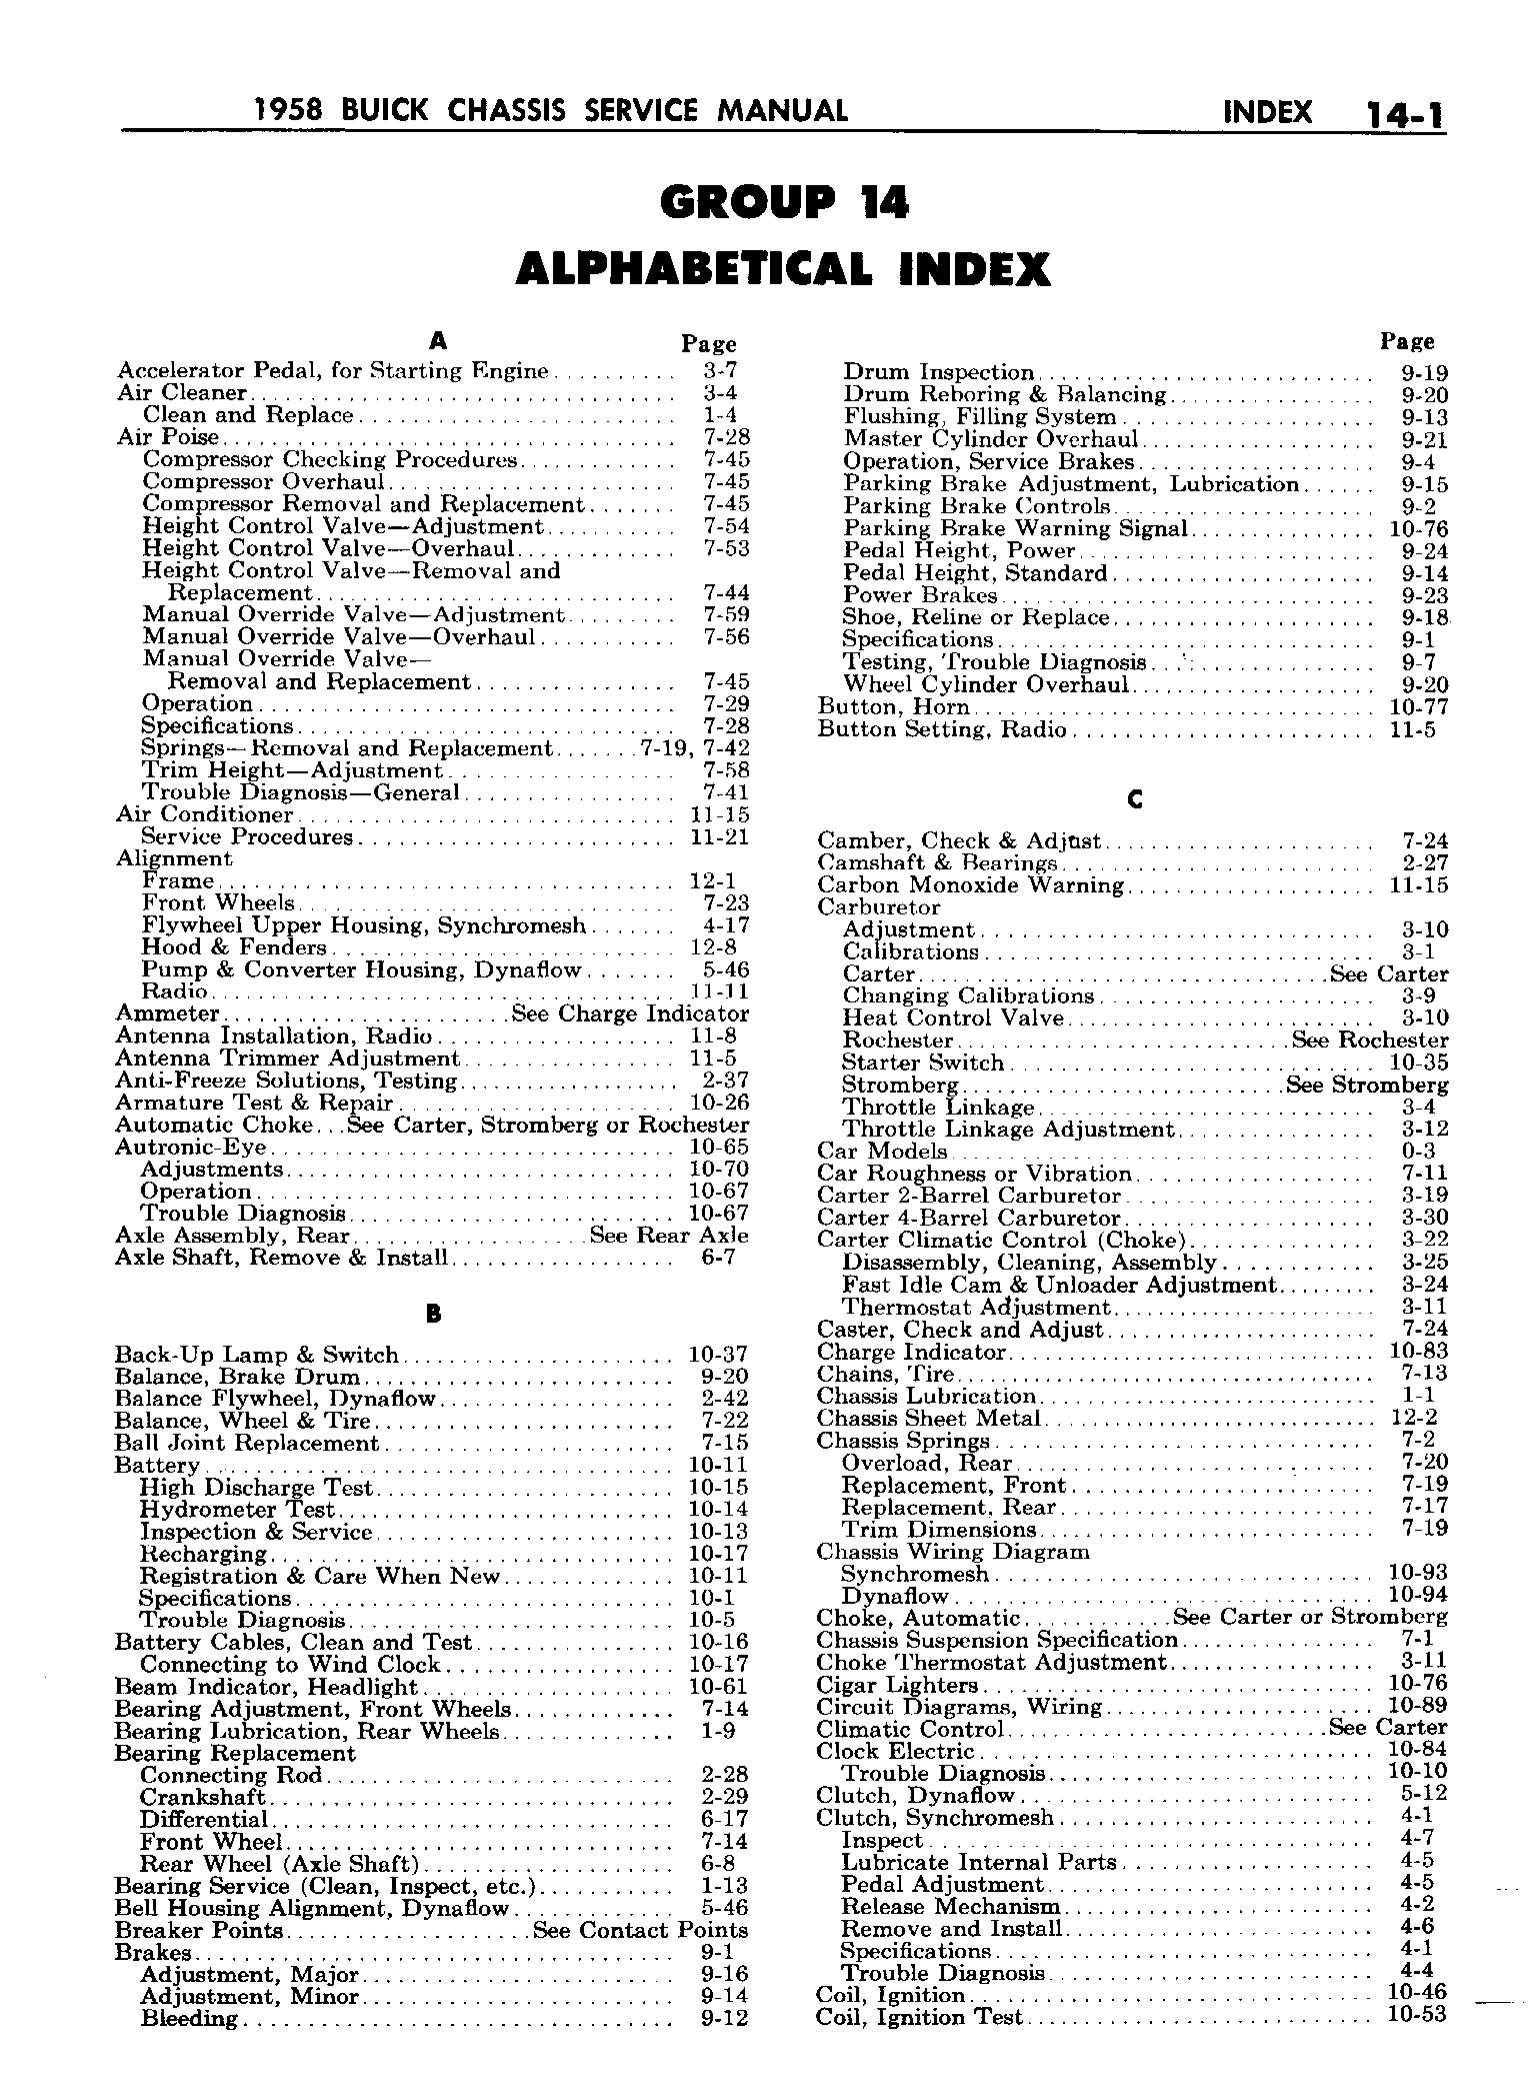 n_14 1958 Buick Shop Manual - Index_1.jpg